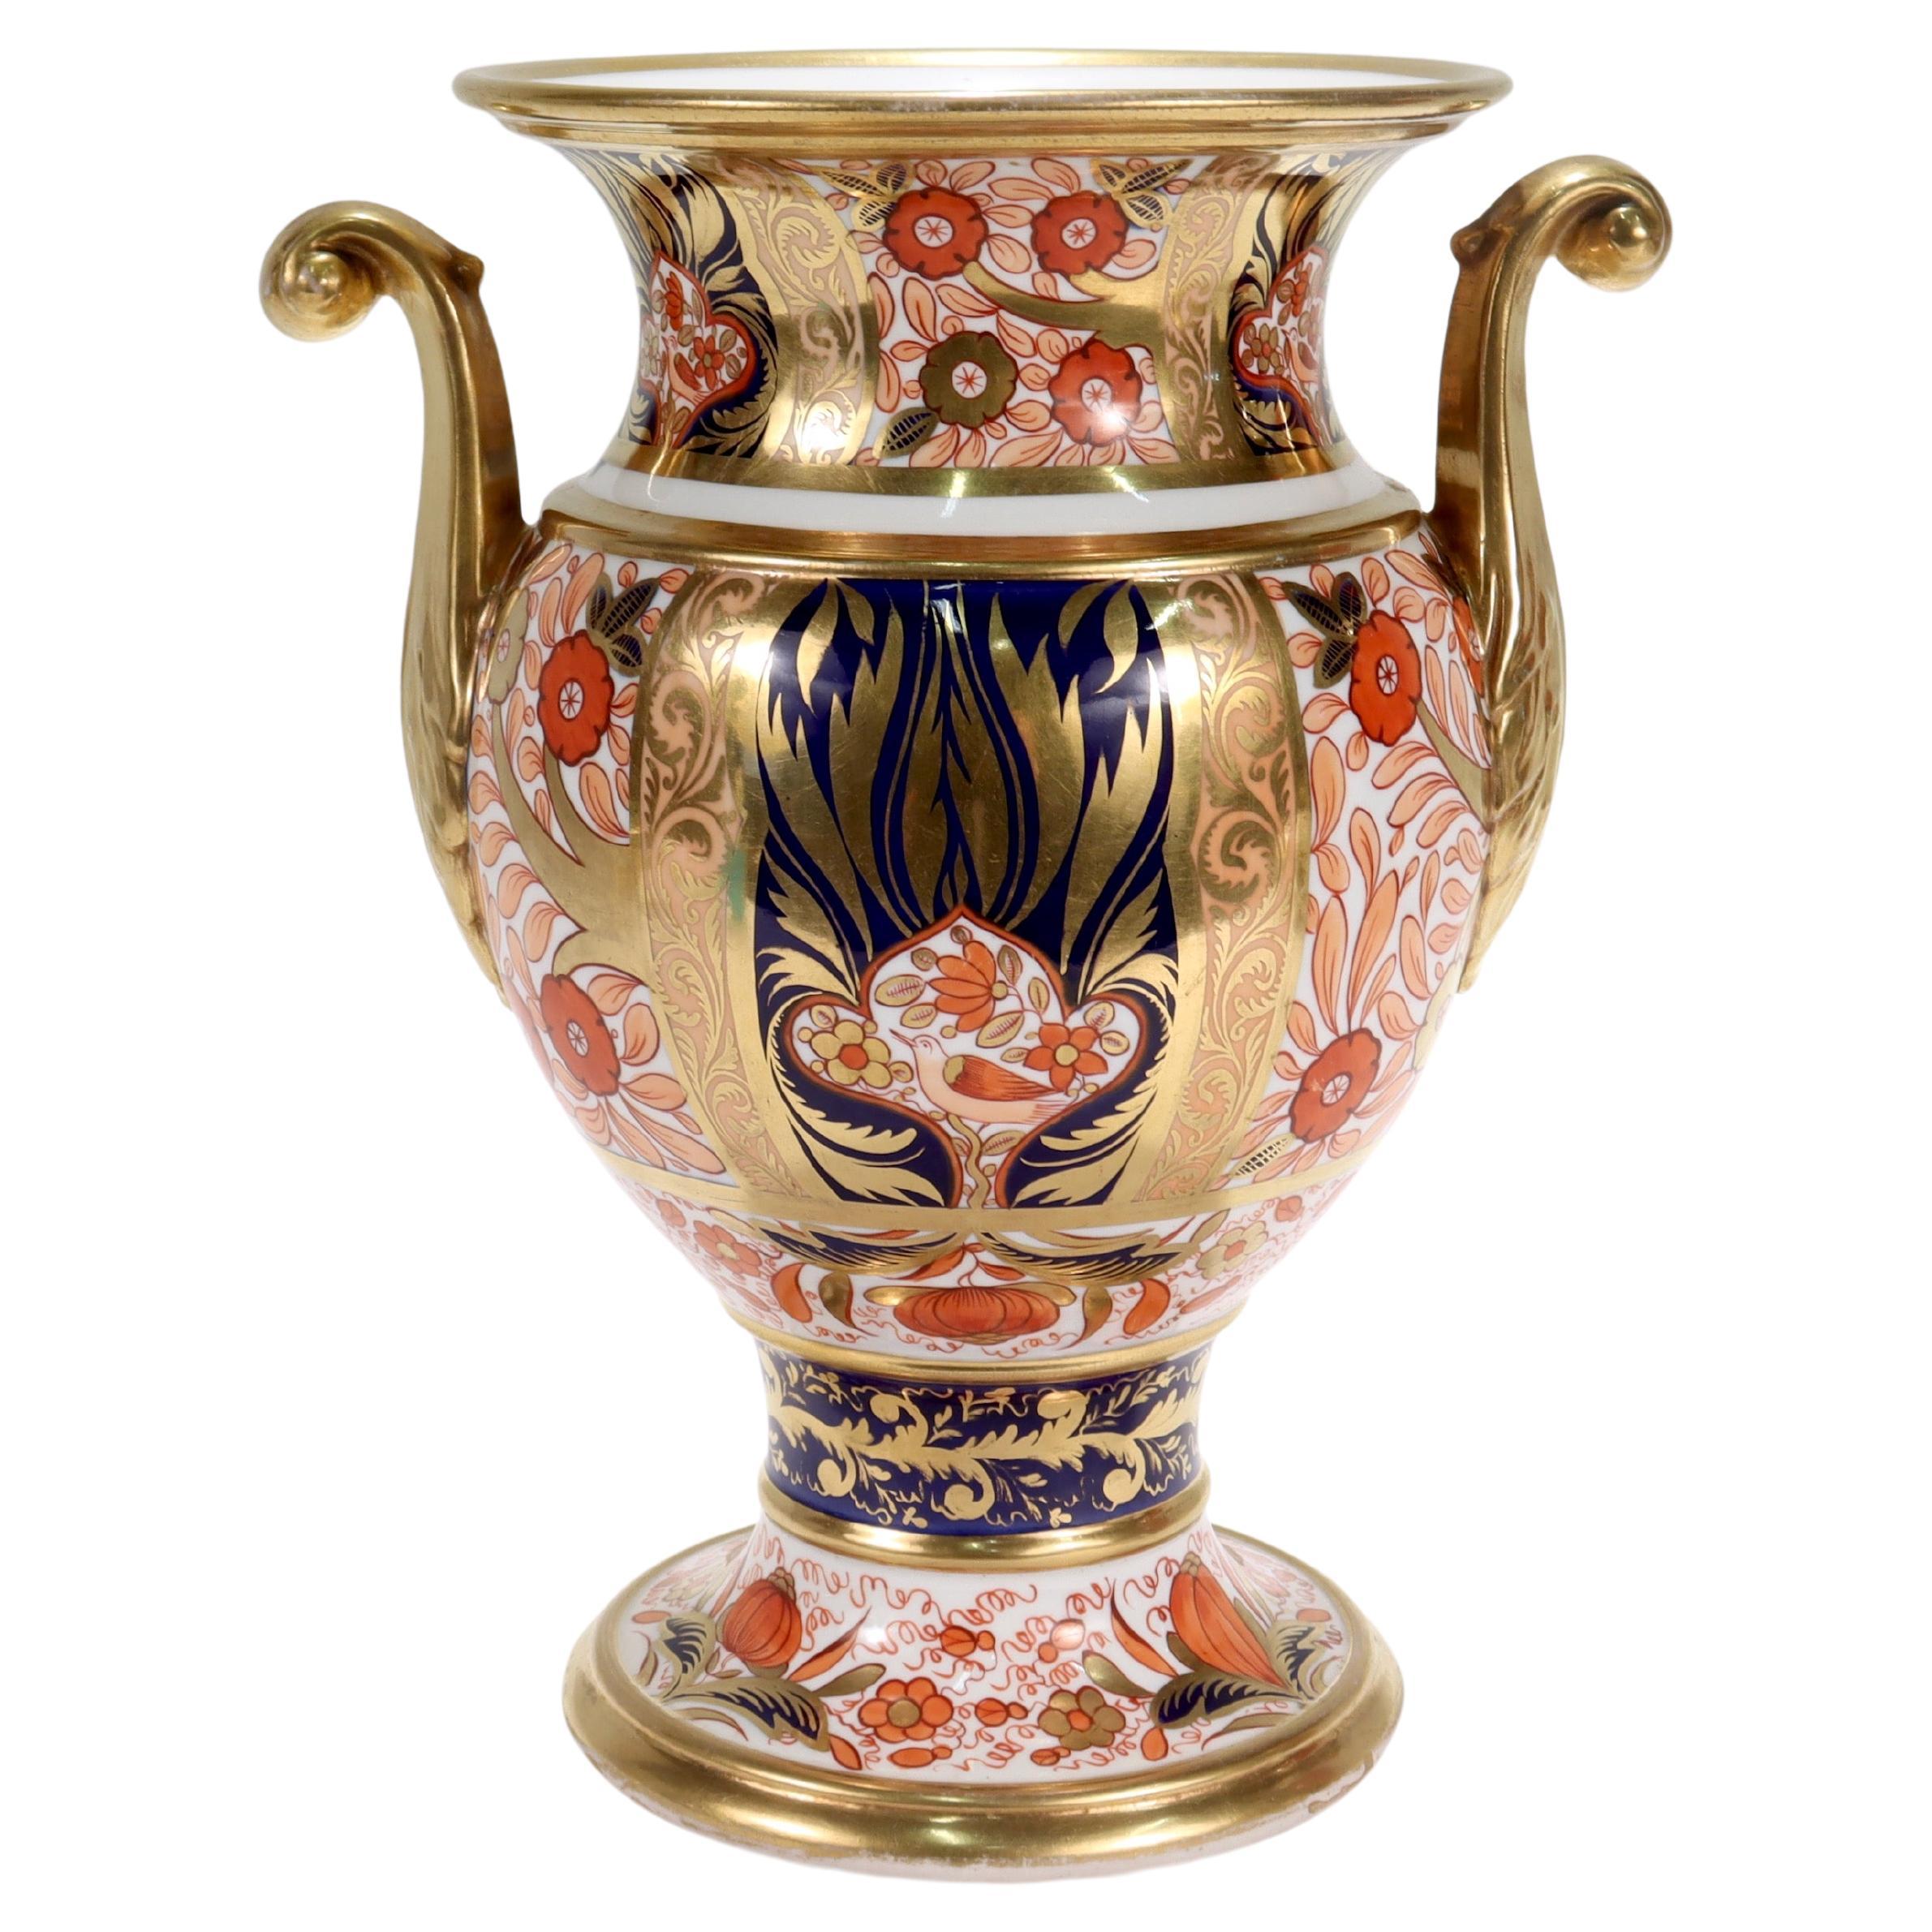 Antique Spode Imari Porcelain Twin Handled Vase Pattern No. 1409, 1820s